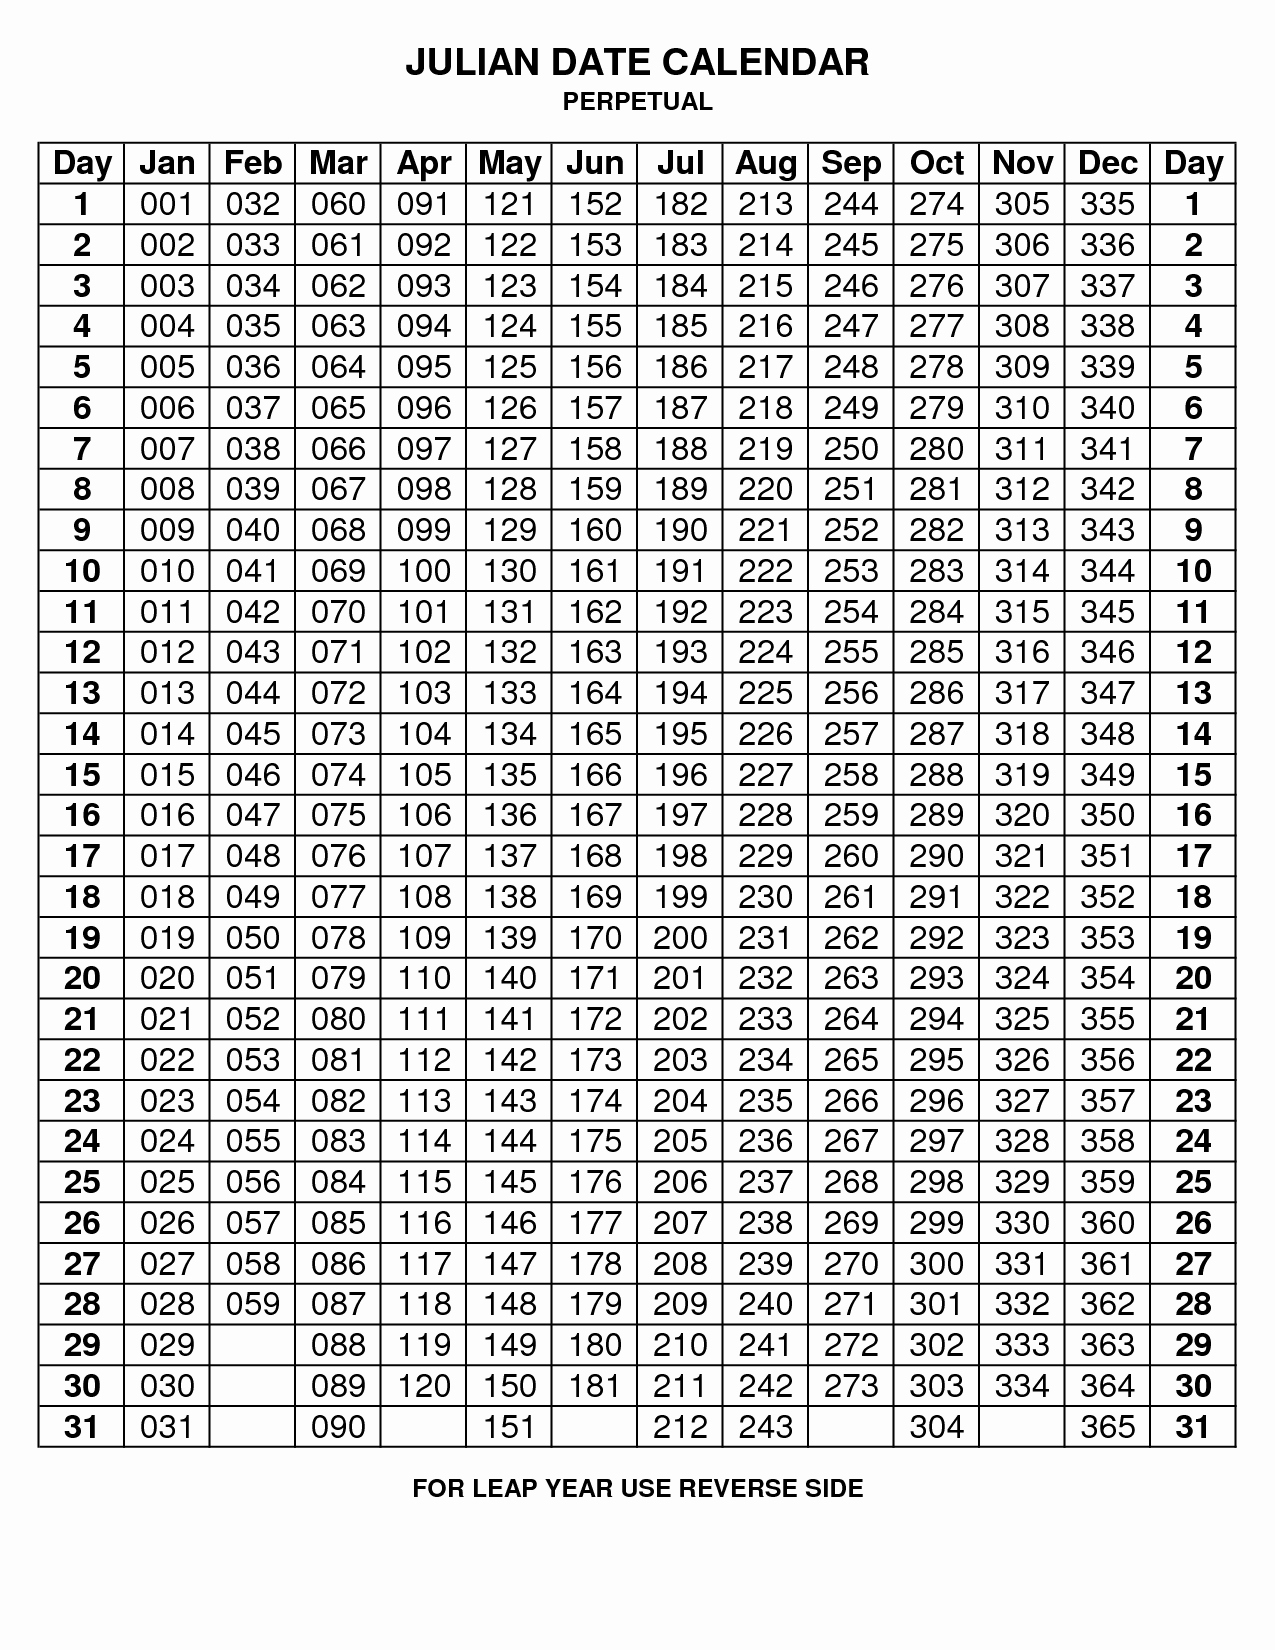 Depo Provera Perpetual Calendar To Print - Calendar  2021 Depo Provera Yearly Schedule